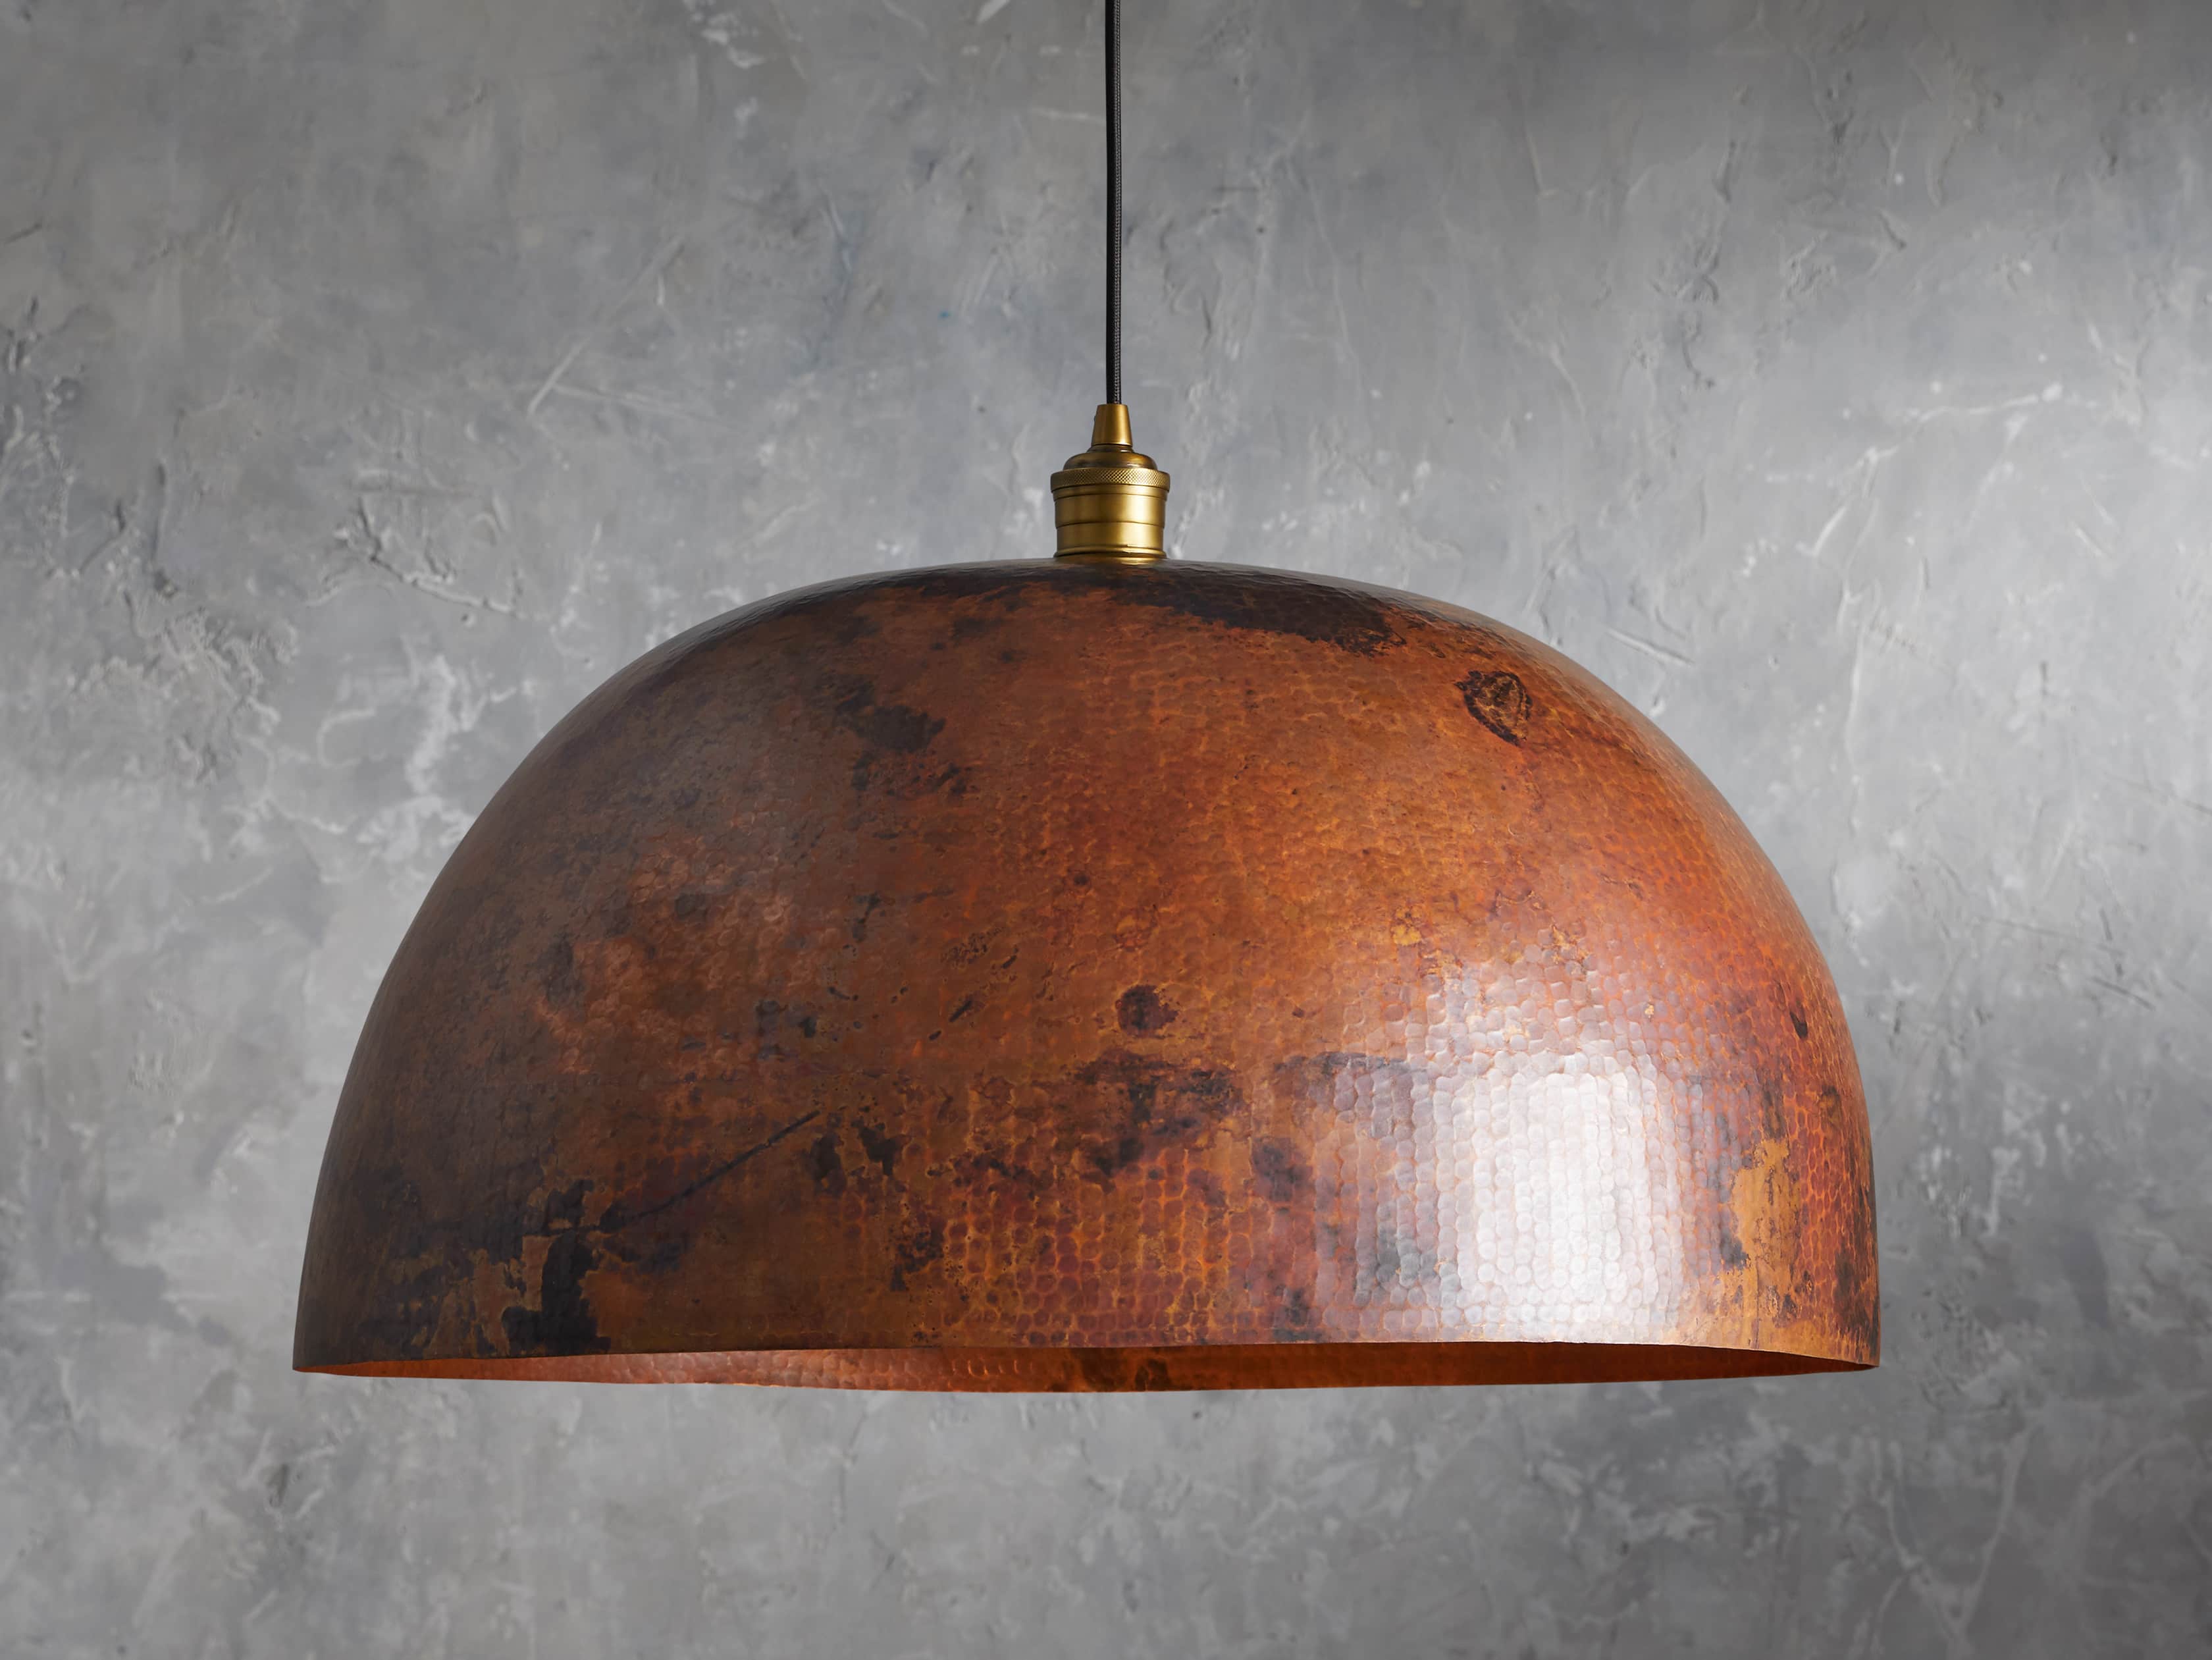 Dome Copper Pendant Arhaus - Copper Pendant Ceiling Light Fitting Instructions